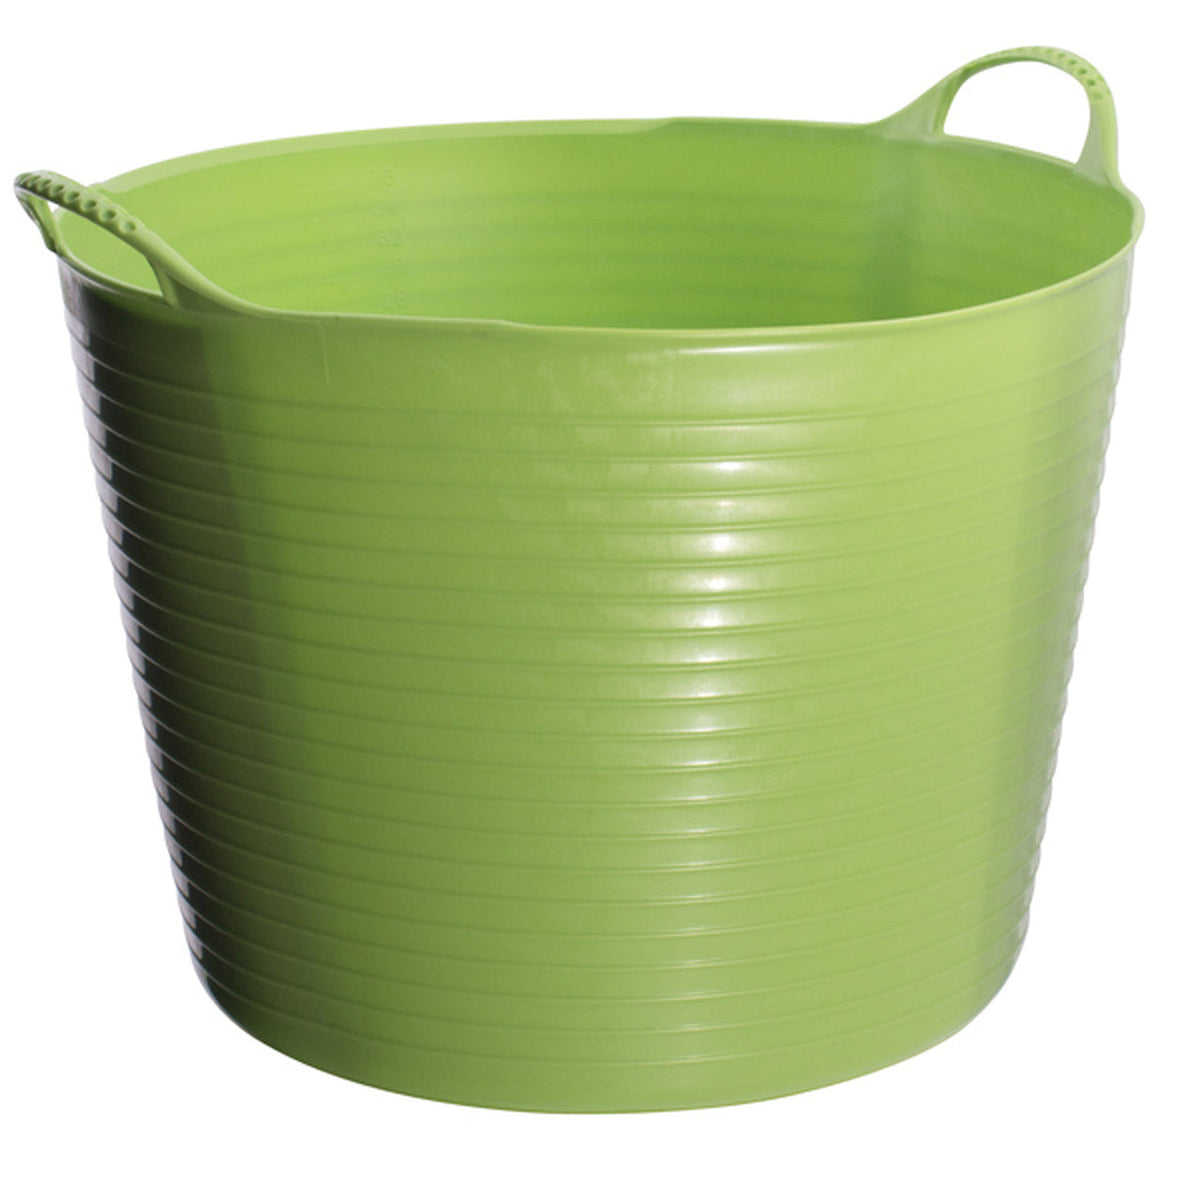 Lime green bucket